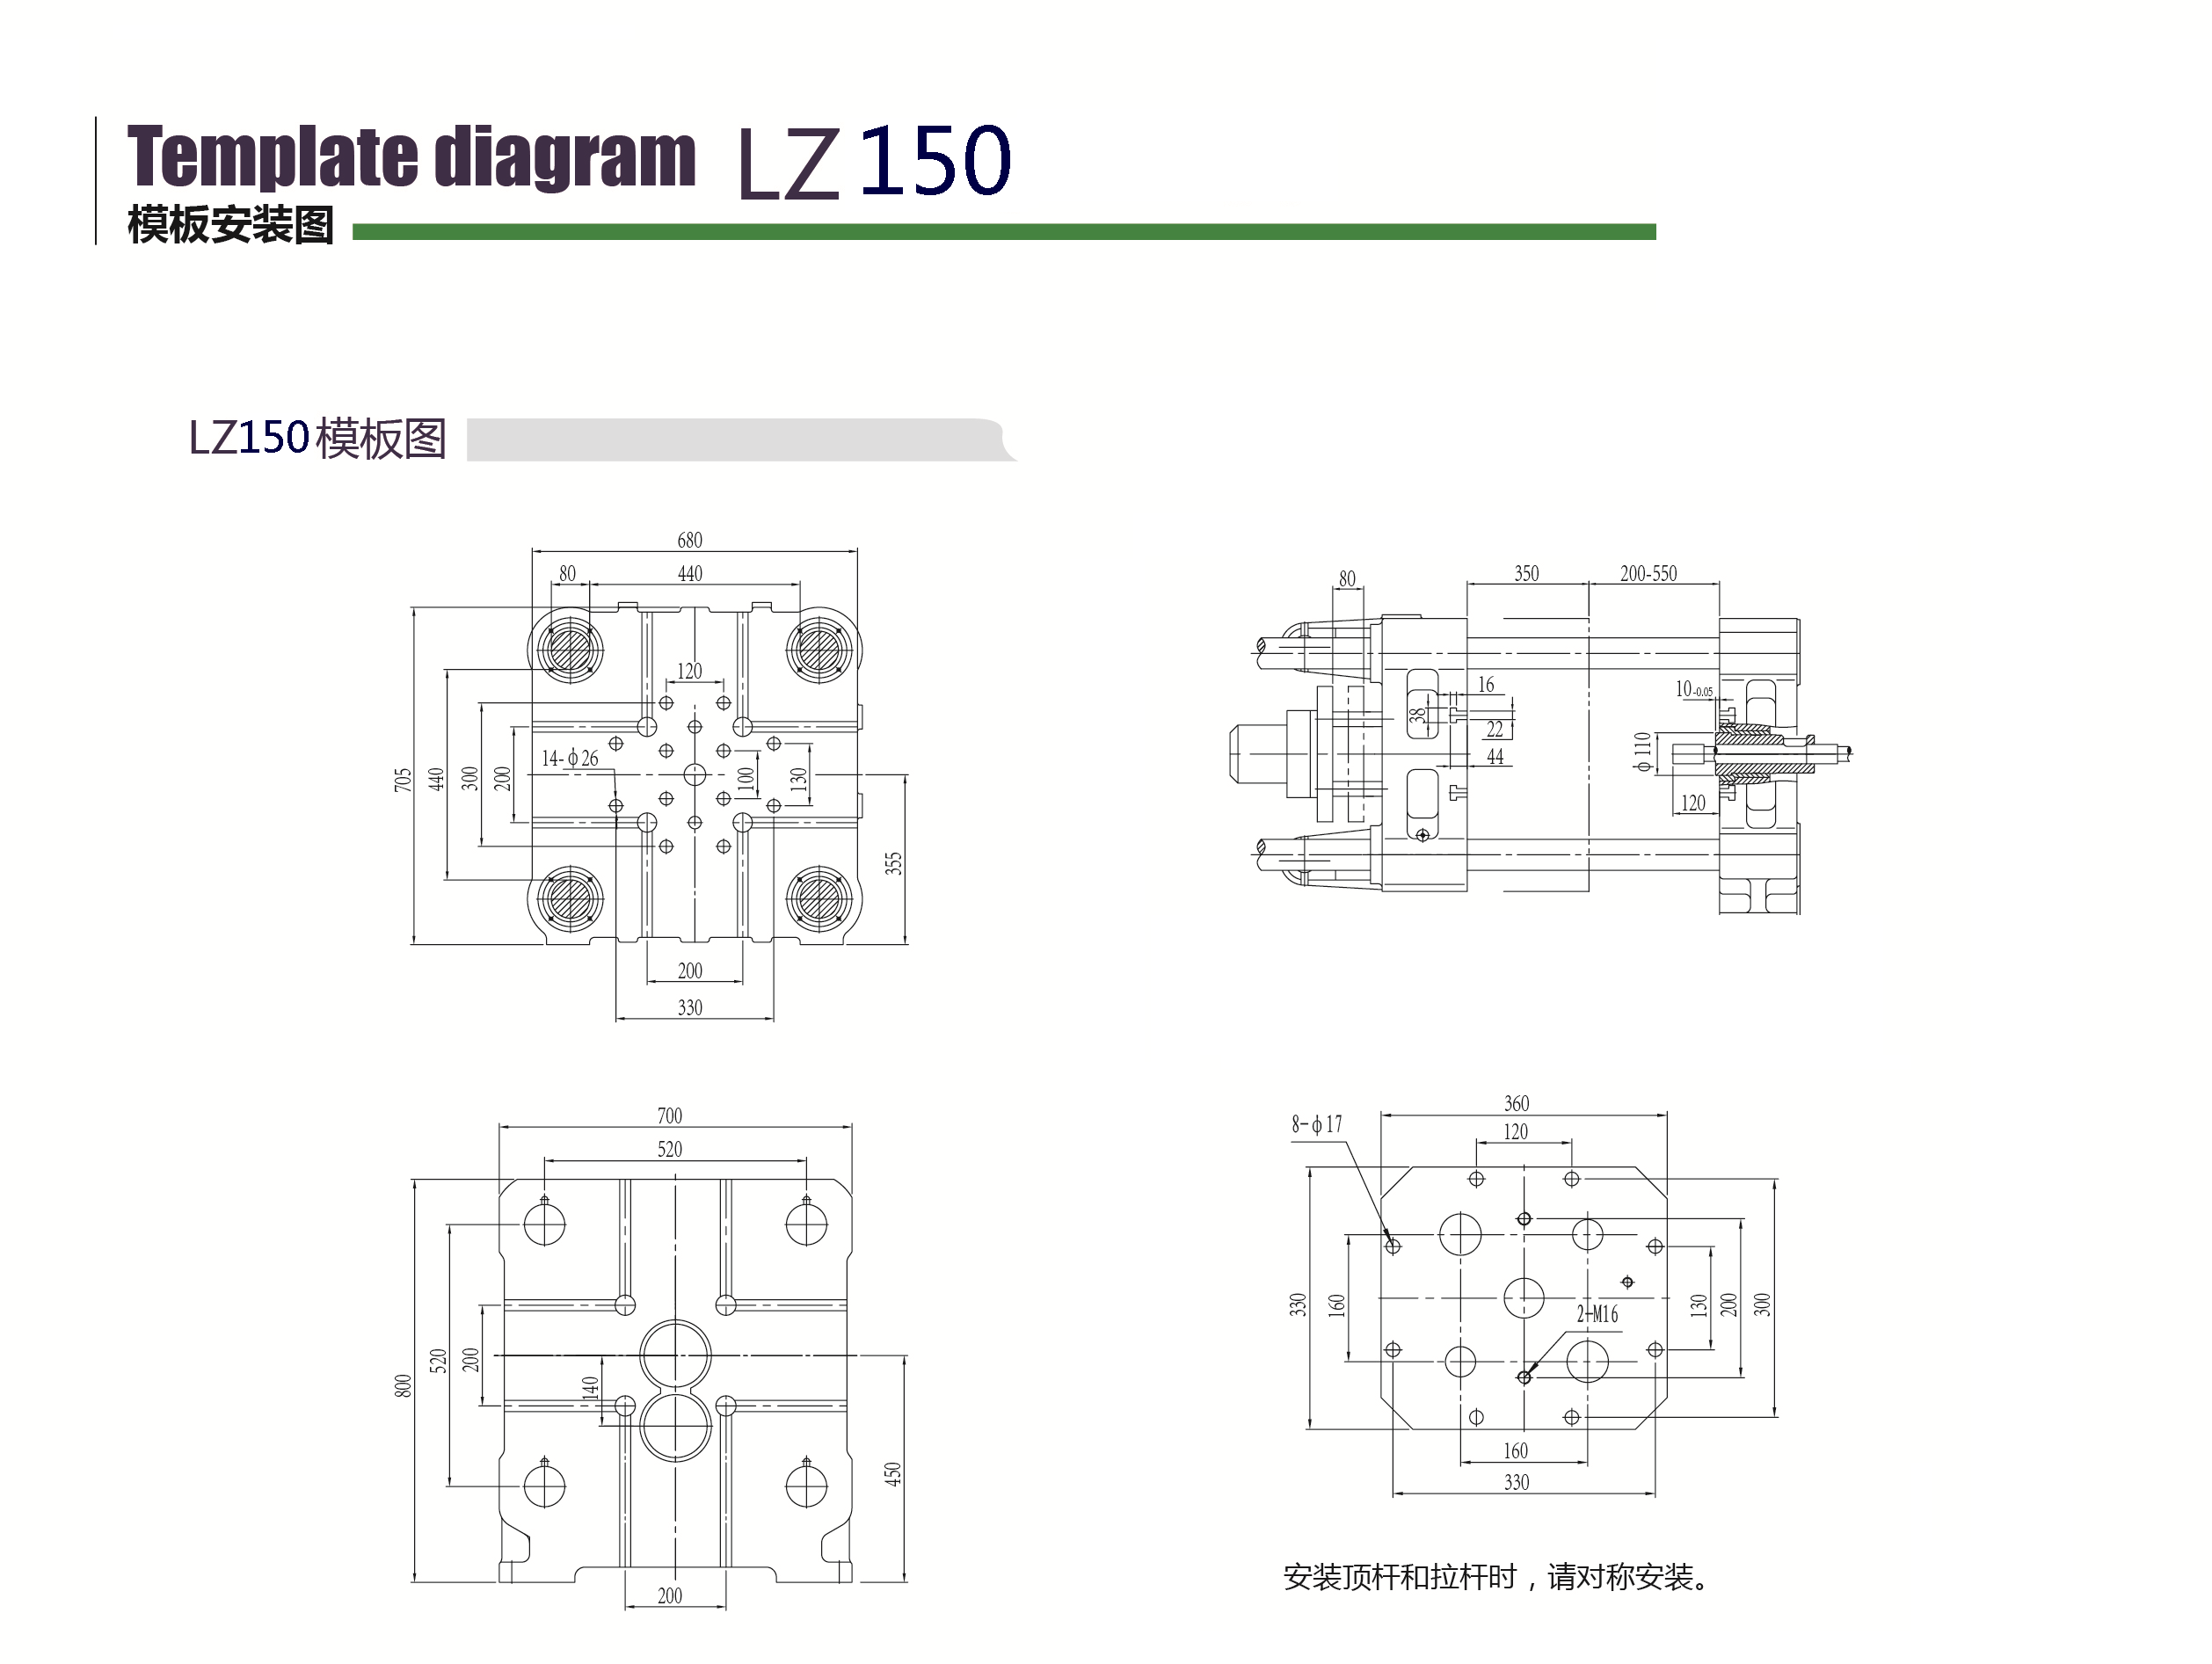 LZ150 die casting machine molding plate diagram